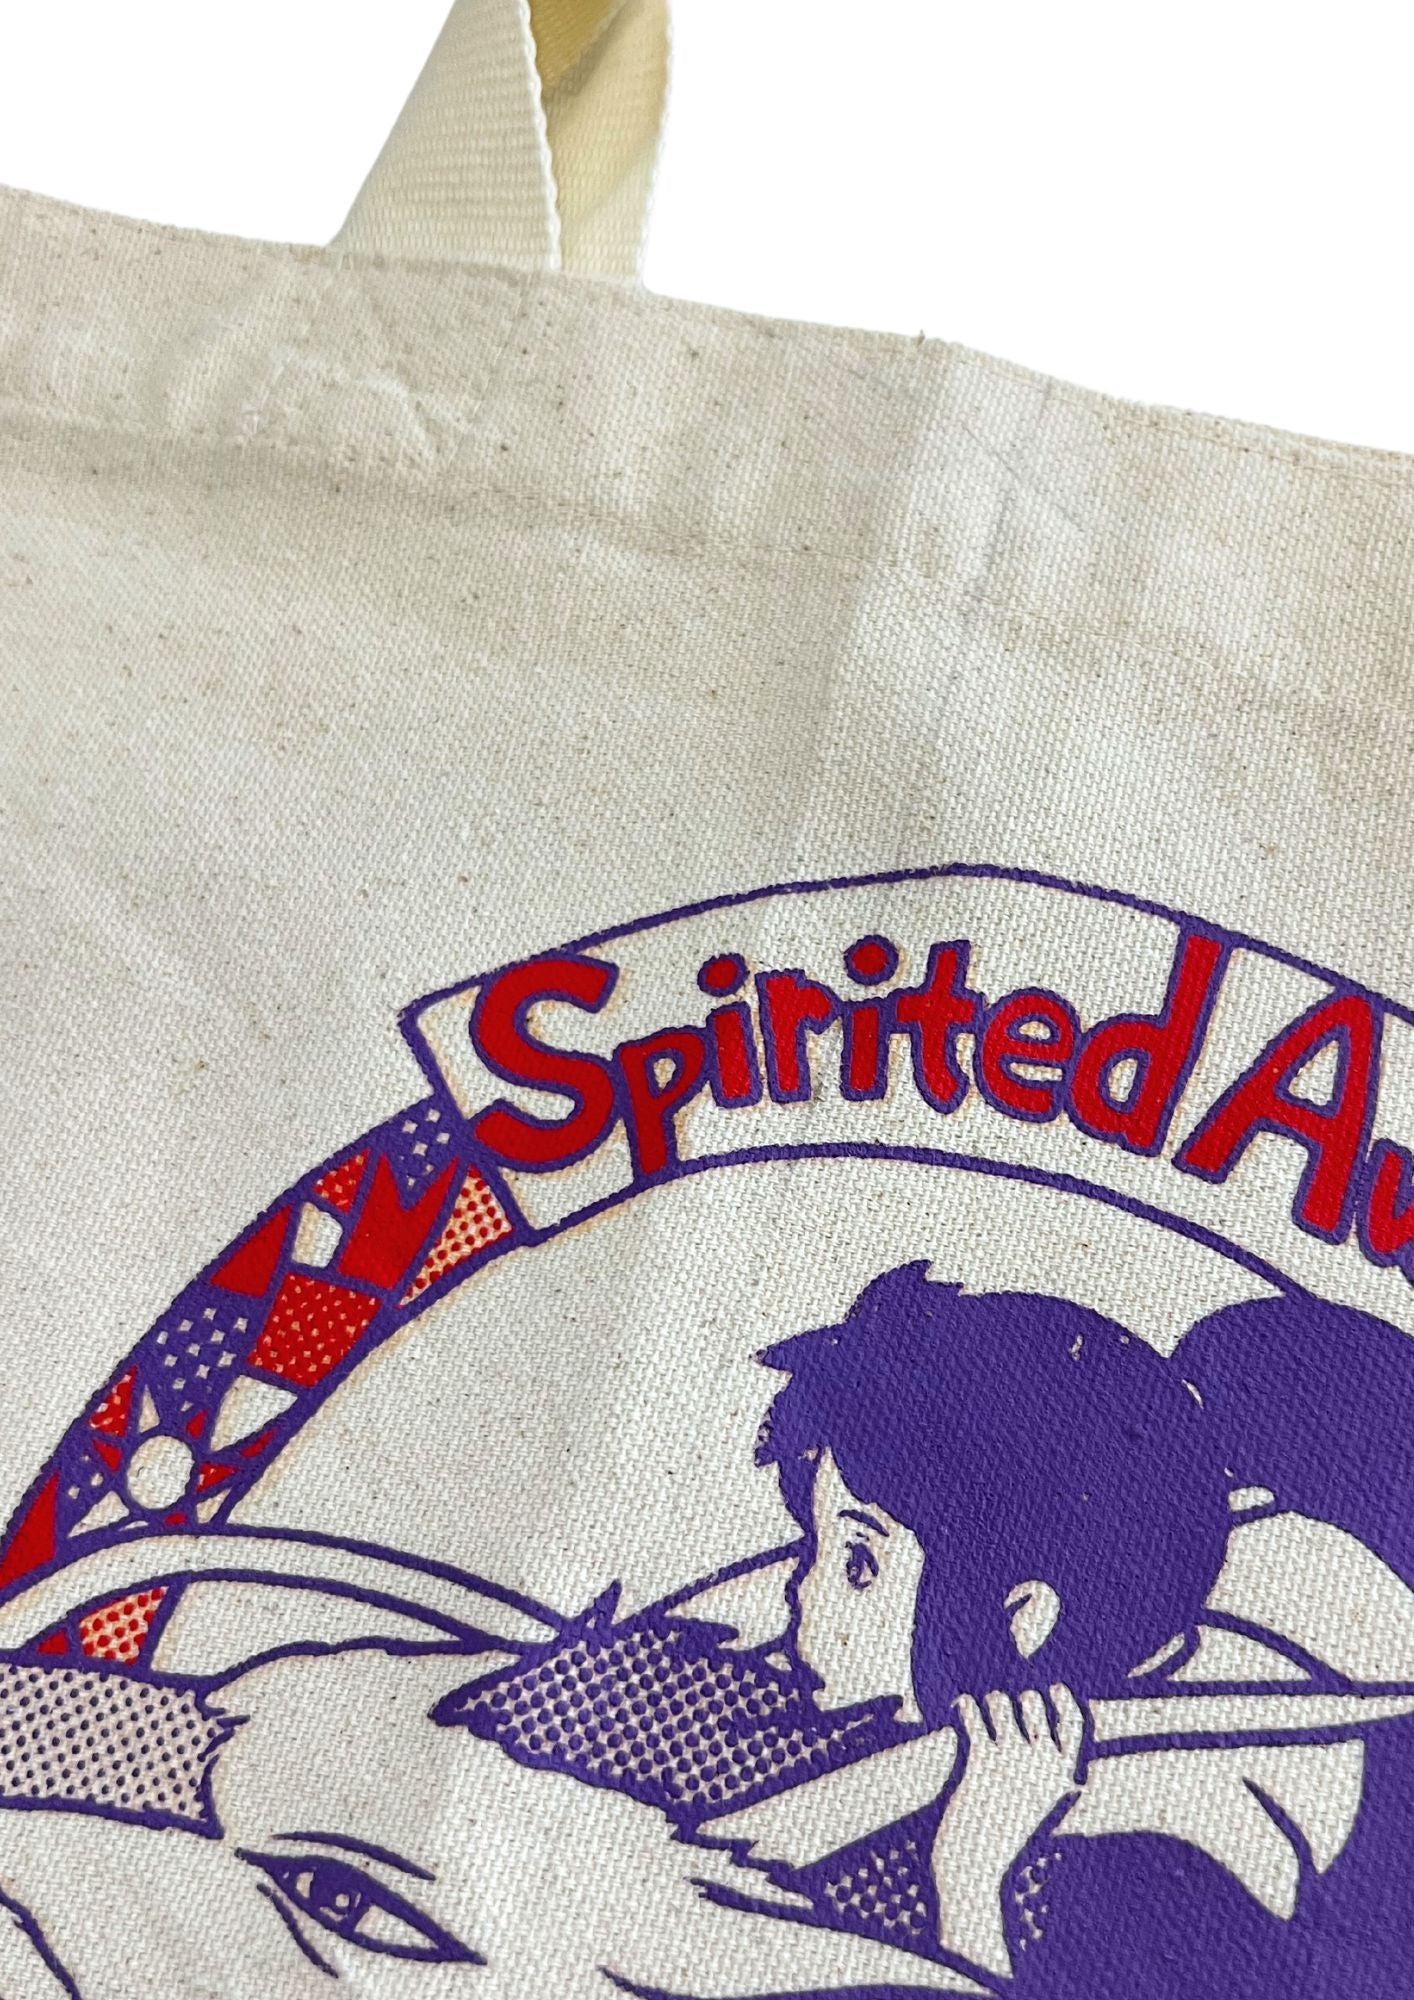 2021 Spirited Away x Studio Ghibli 20th Anniversary Tote Bag